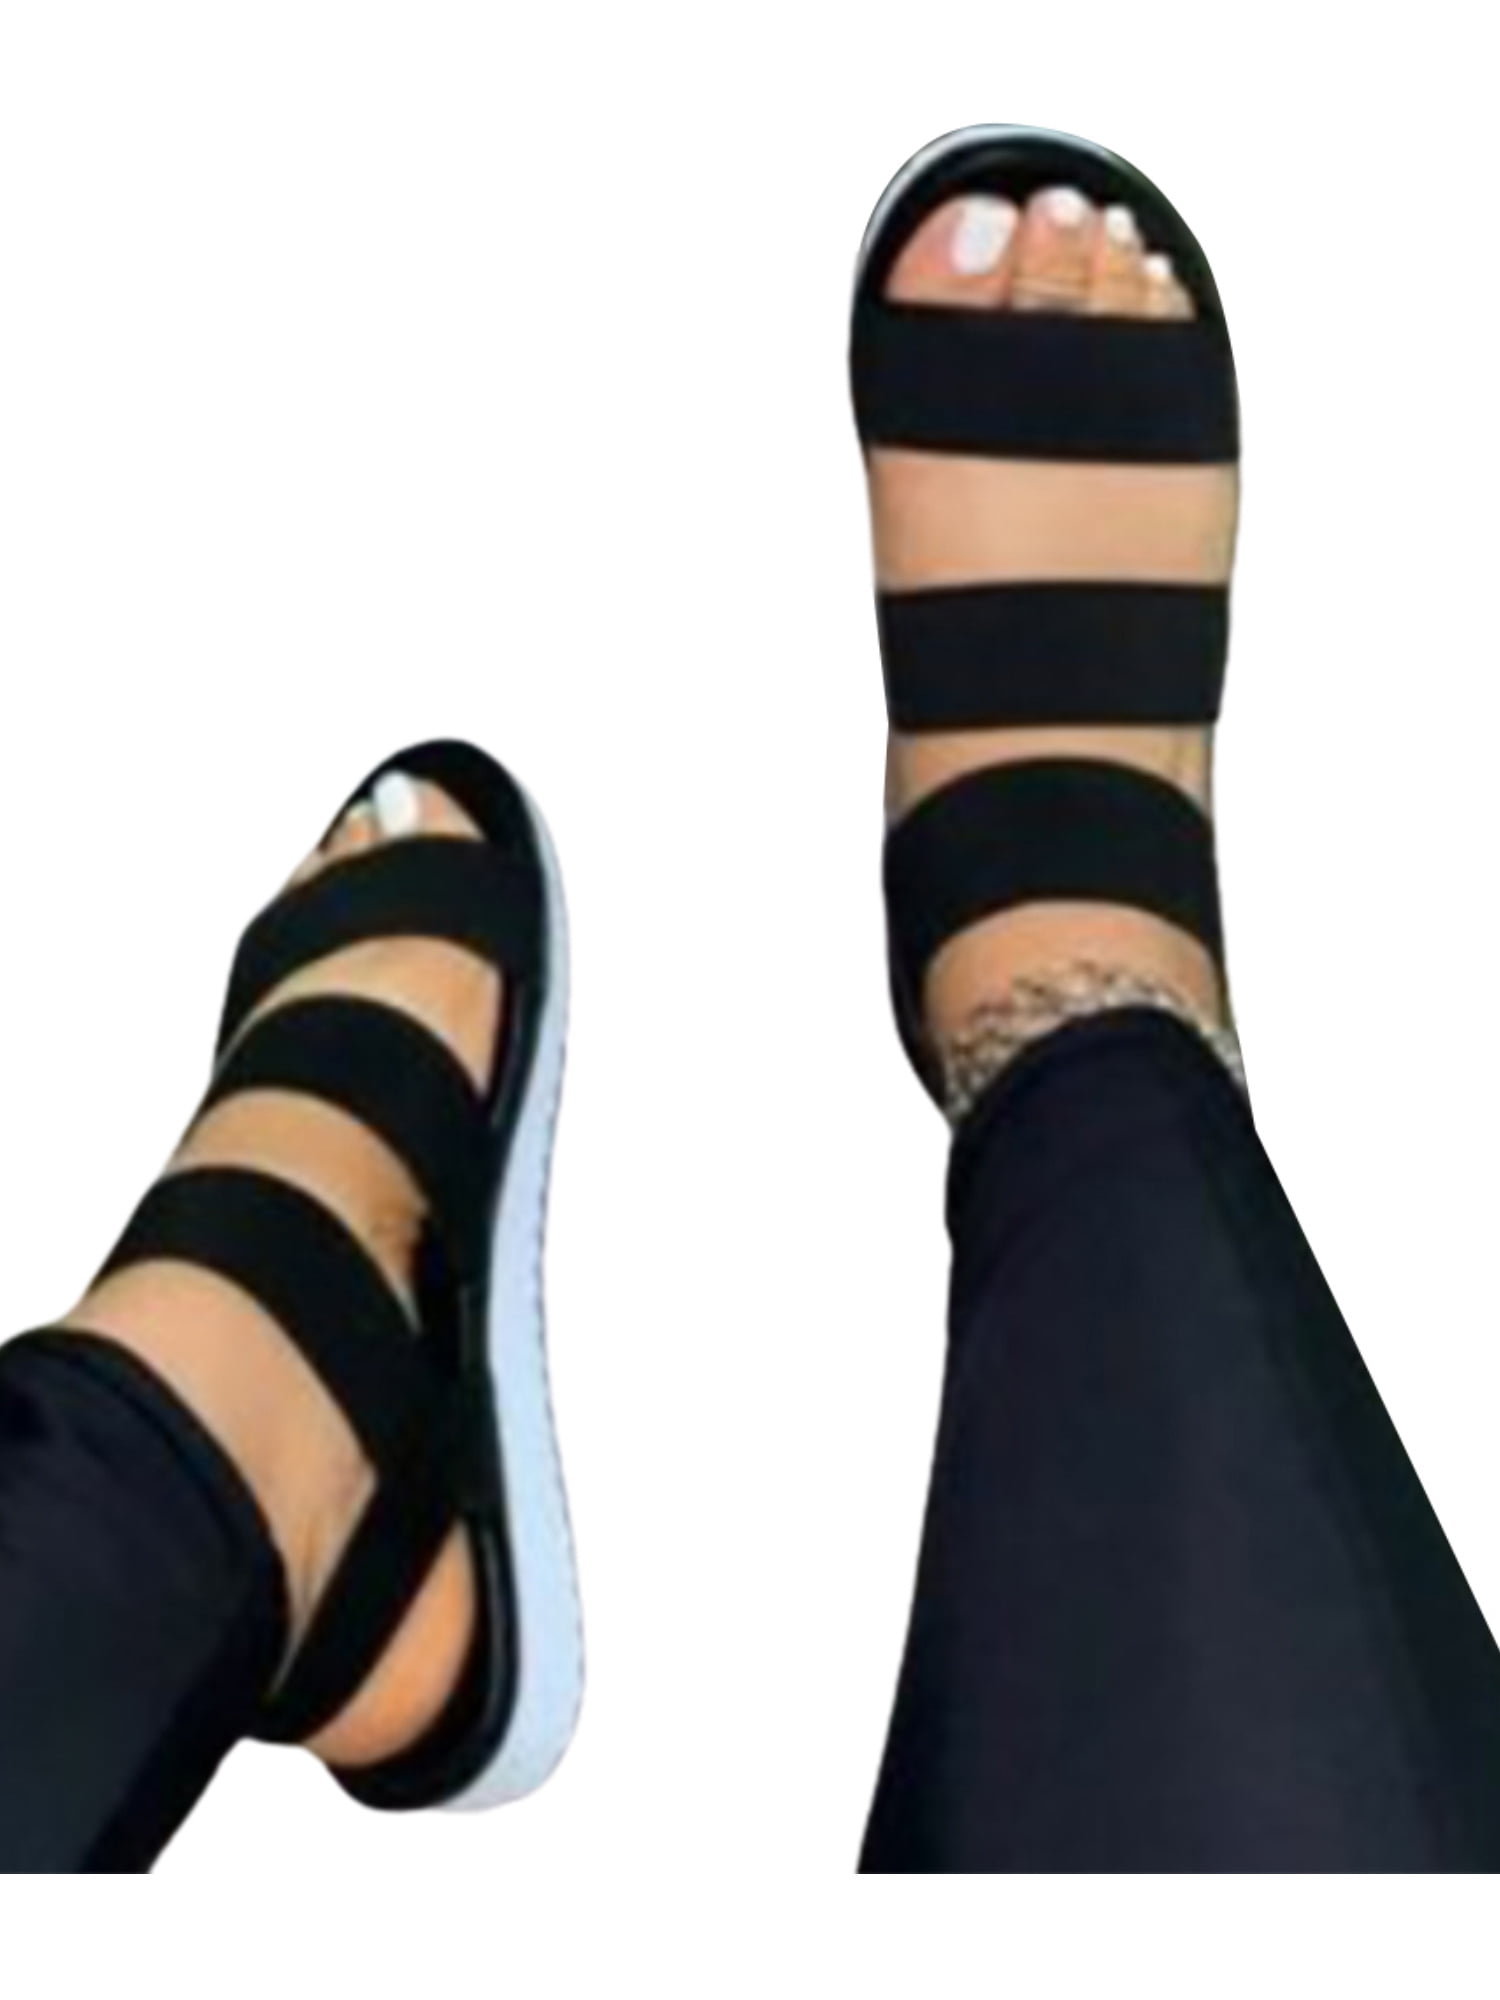 Hot Womens Flats Heel Sandals Slingback Open Toe Ankle Strap Summer Comfy Shoes 